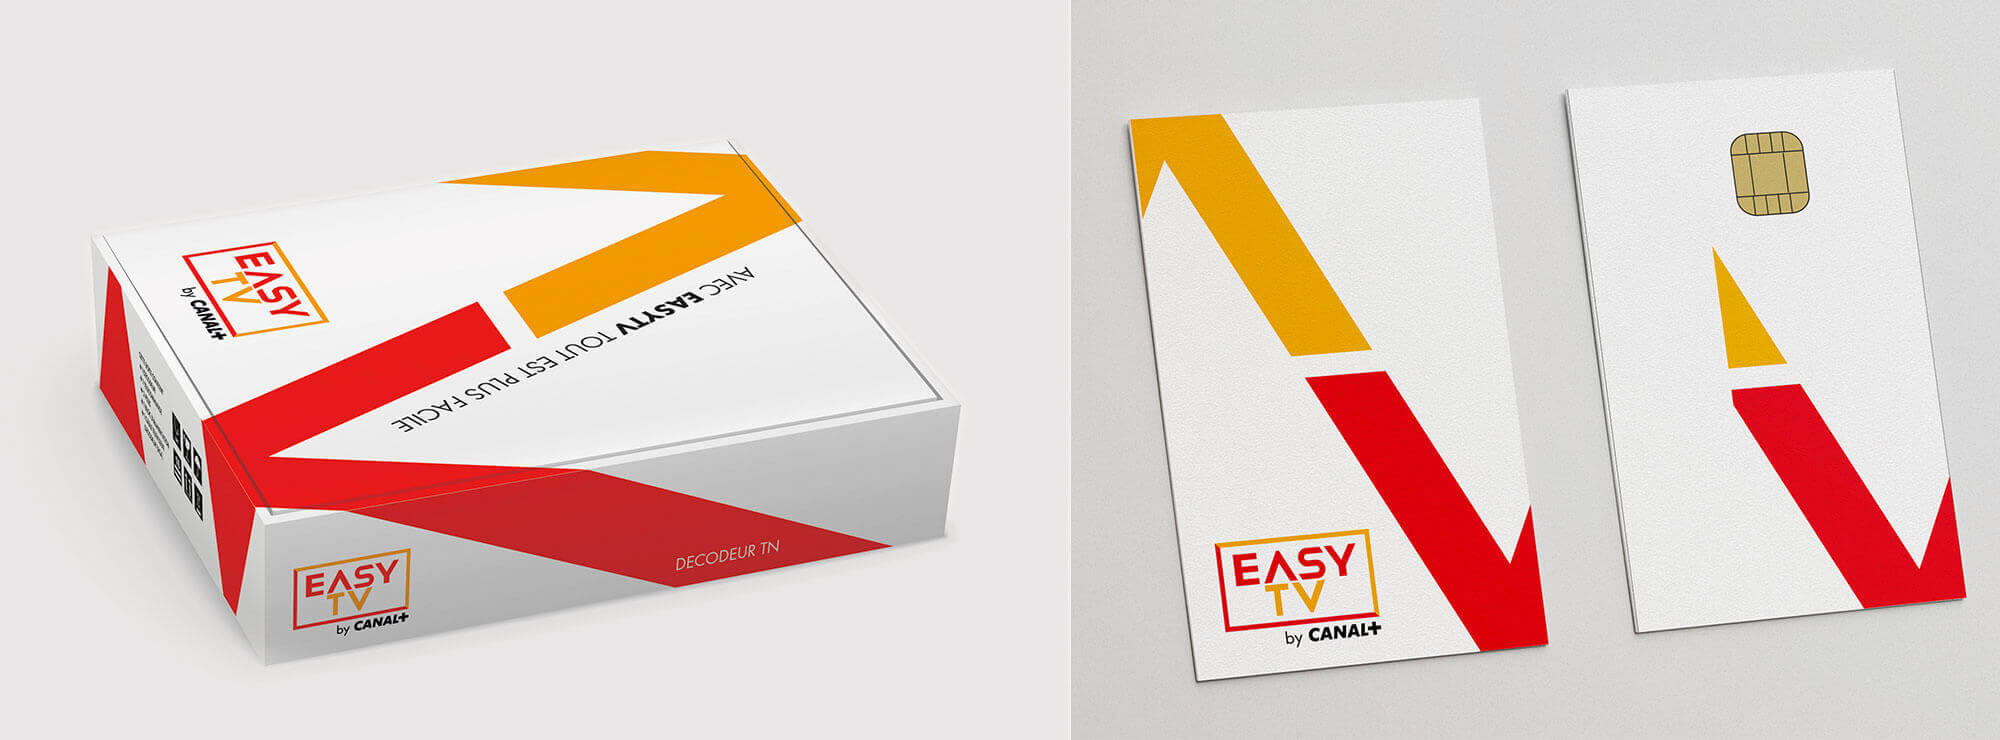 Canal+ - an easy logo